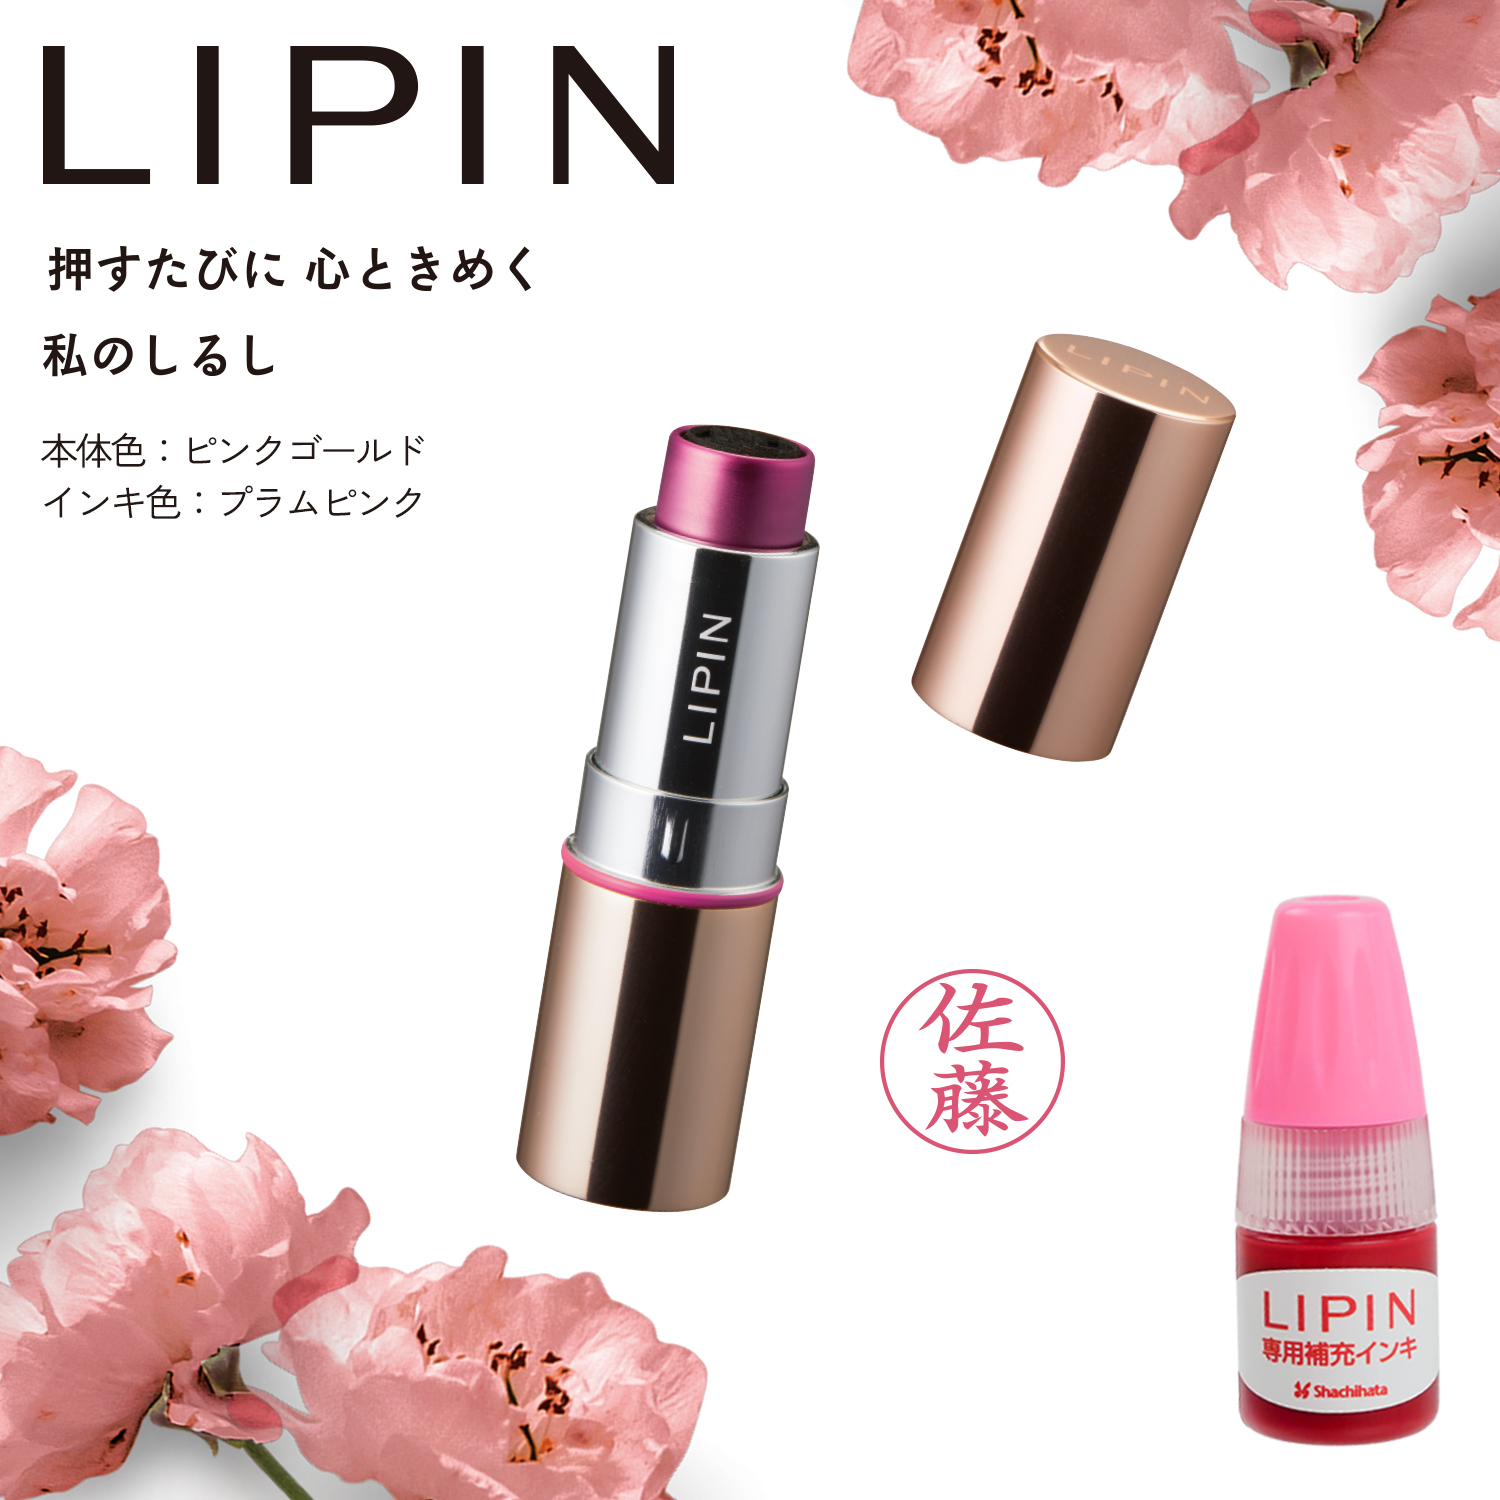 LIPIN+専用補充インキセット【本体色:ピンクゴールド/インキ色:プラムピンク】_1